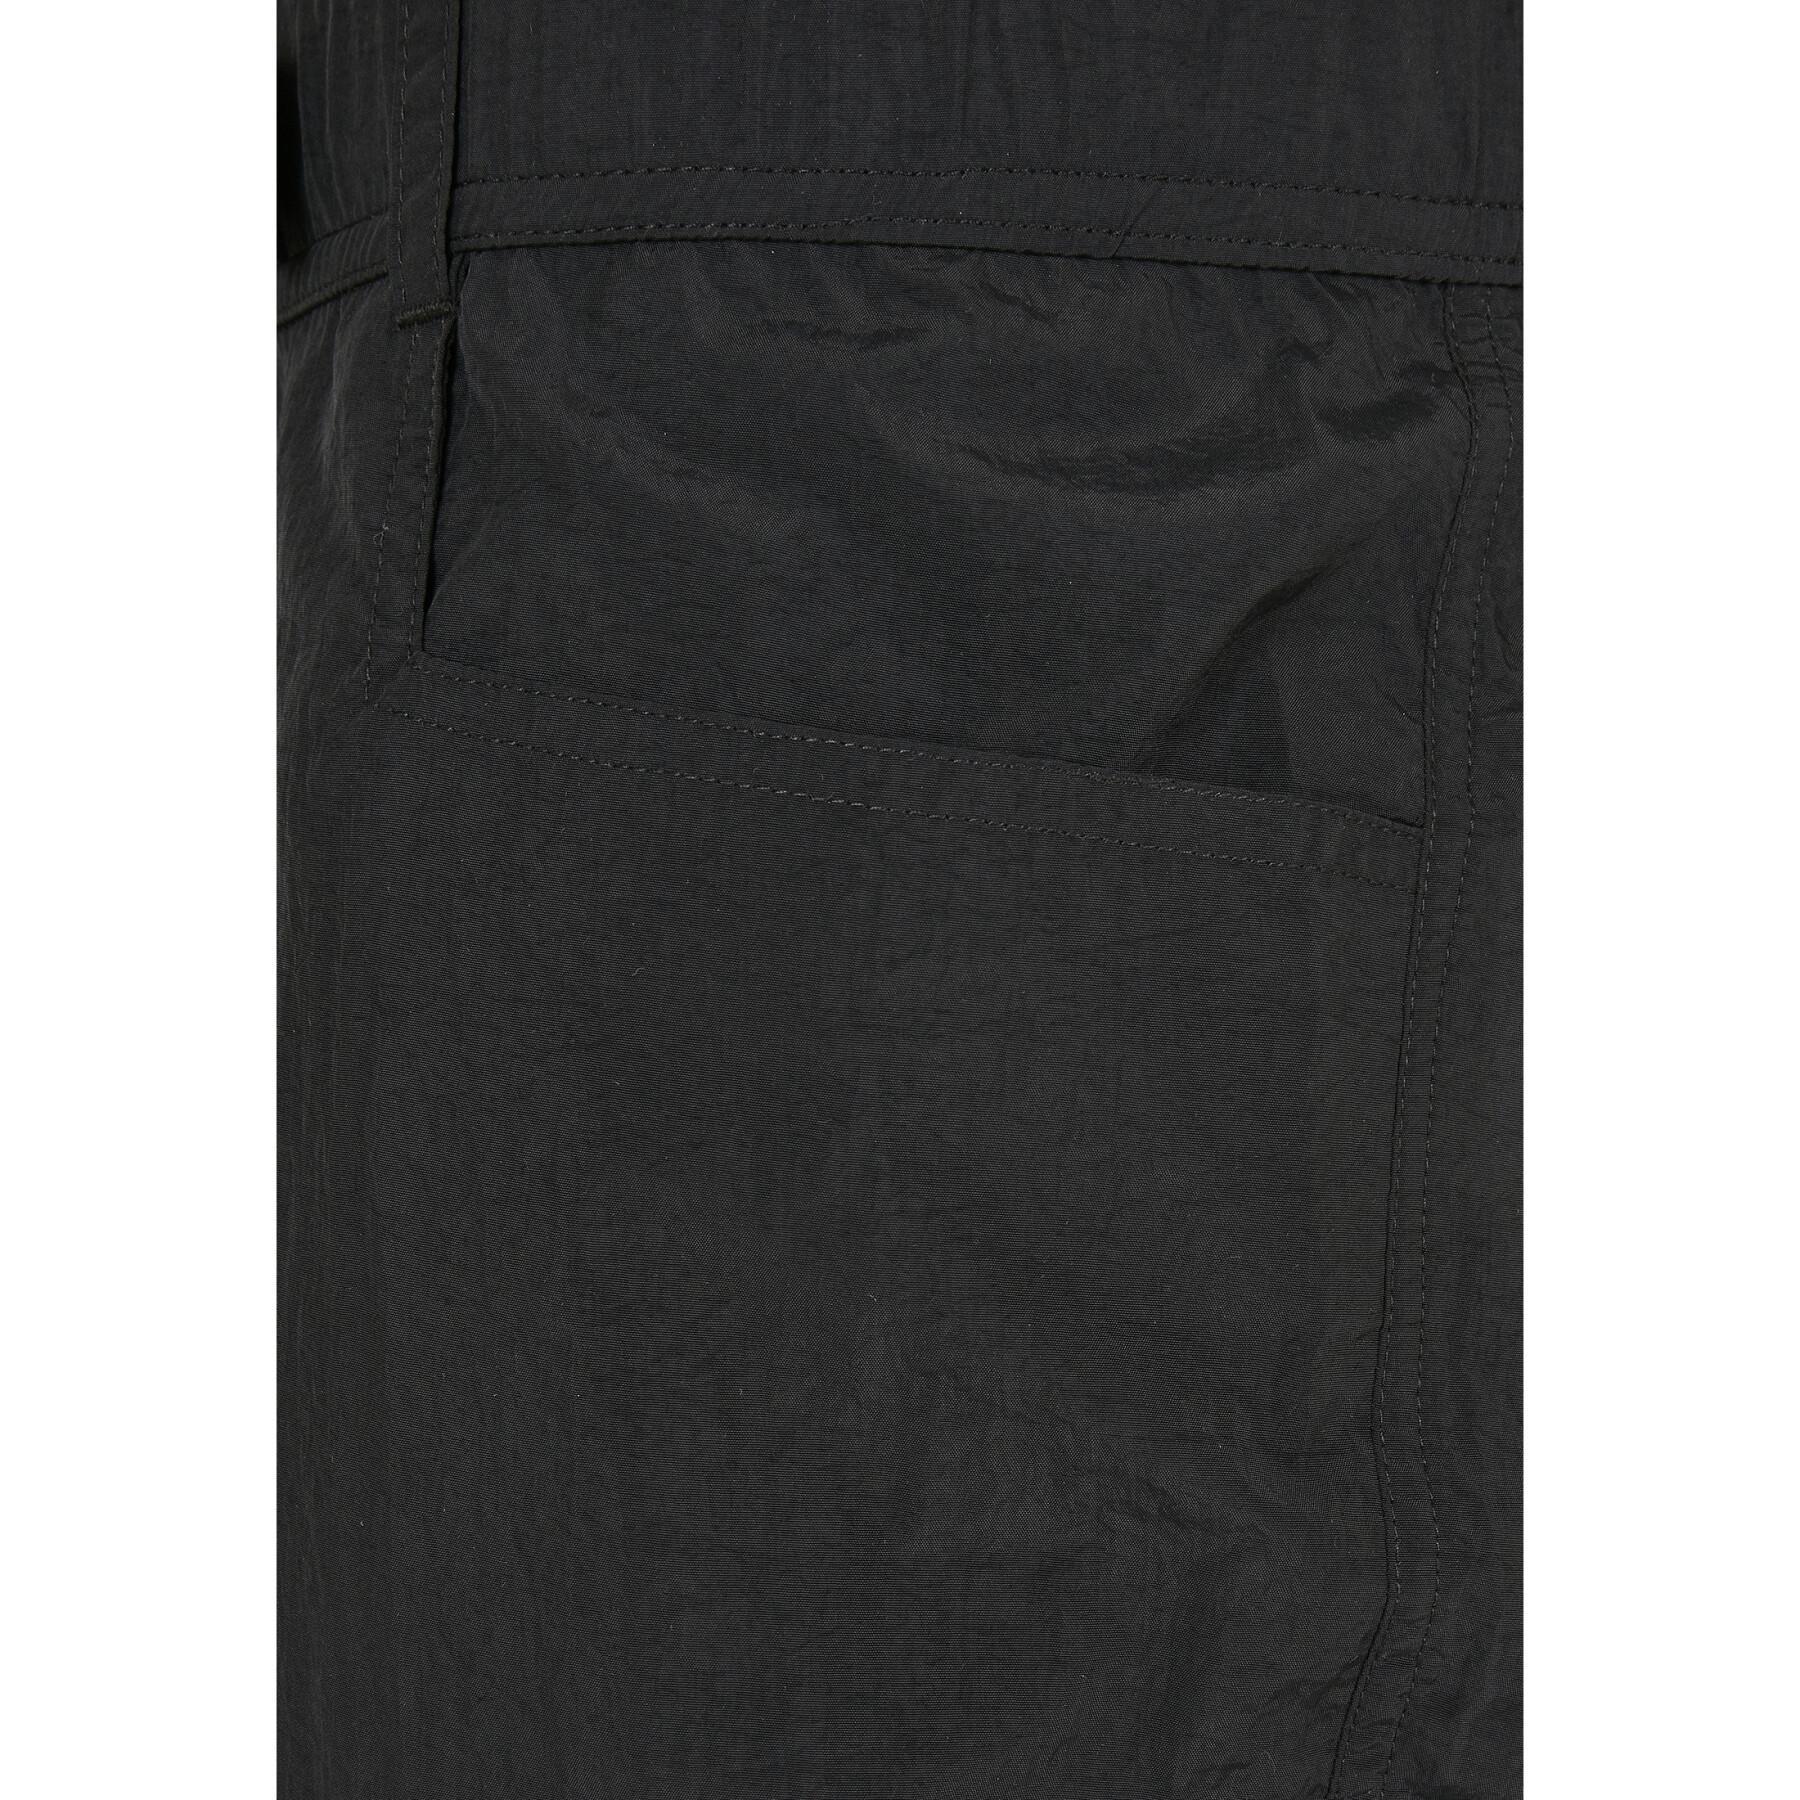 Cargo Pants Urban Classics adjustable nylon